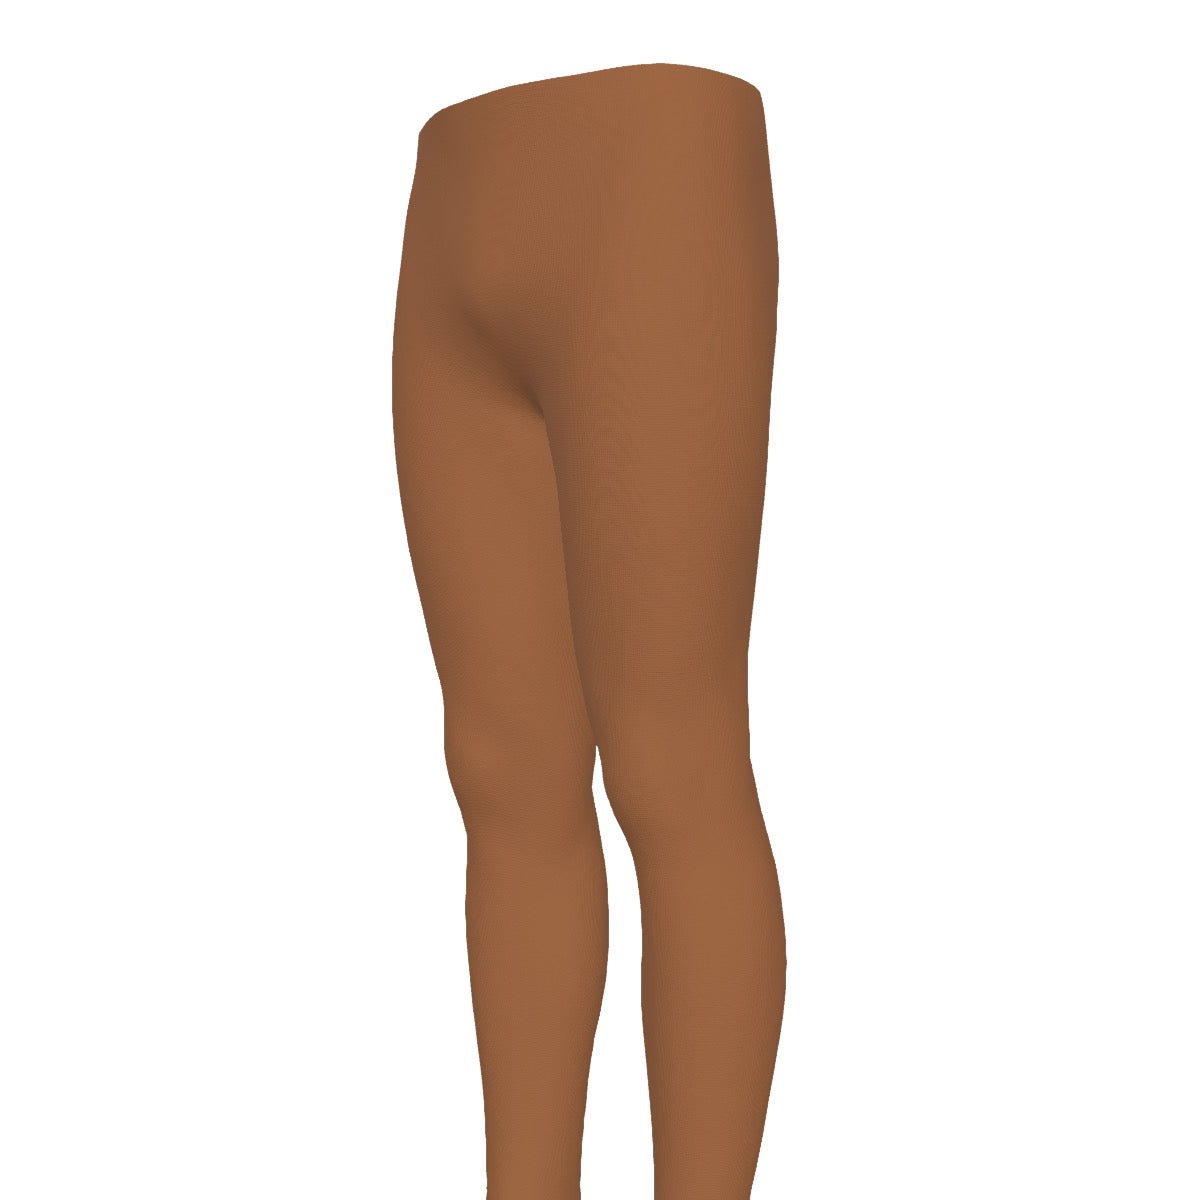 NUDETONE Cinnamon Brown Men's leggings | CANAANWEAR | Men's Leggings |